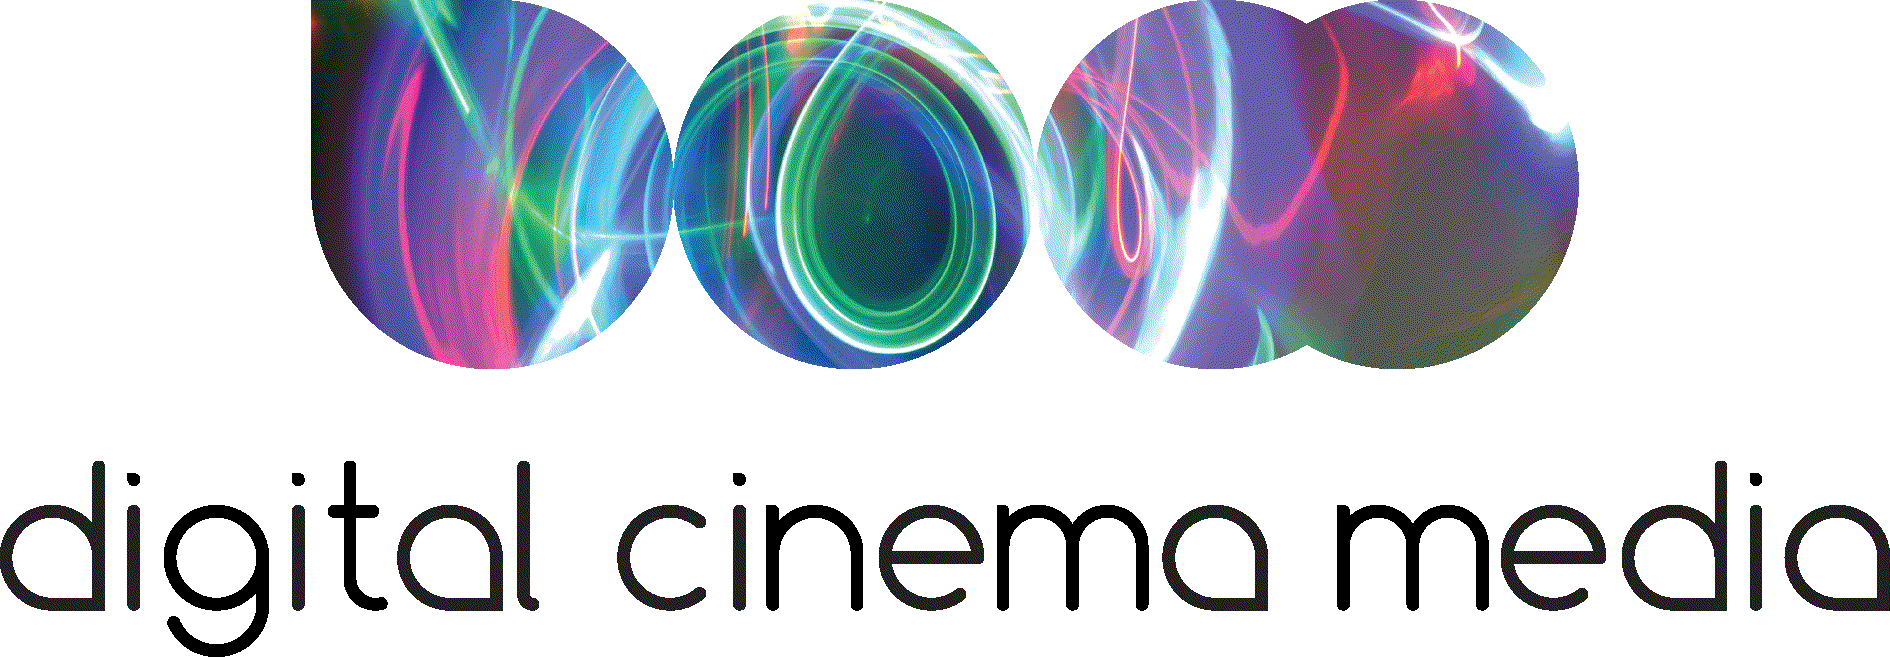 DCM Logo - Digital Cinema Media Competitors, Revenue and Employees